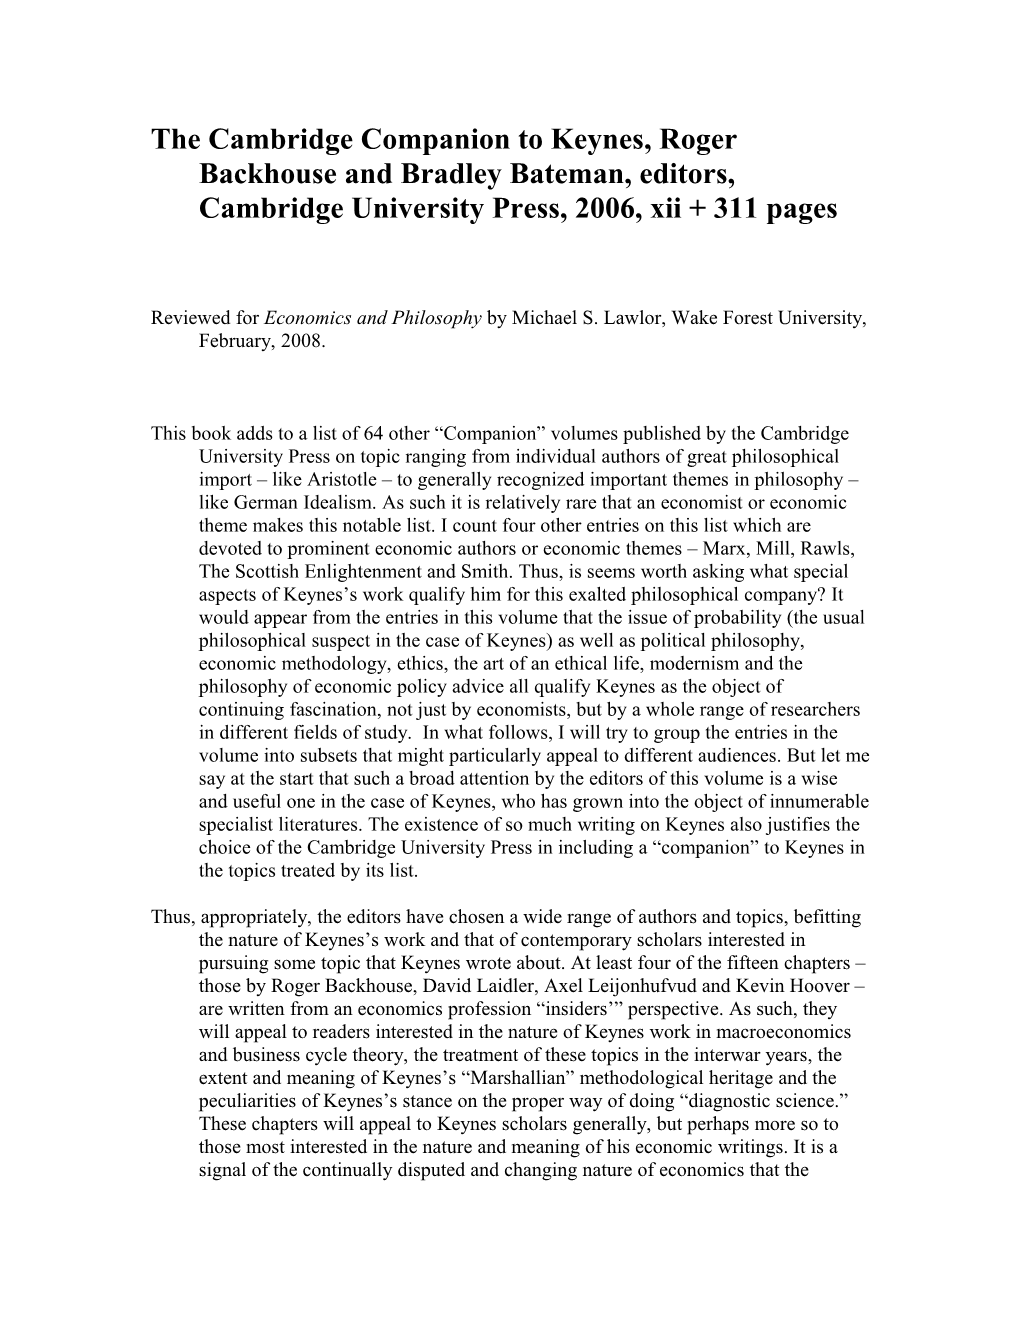 The Cambridge Companion to Keynes, Roger Backhouse and Bradley Bateman, Editors, Cambridge